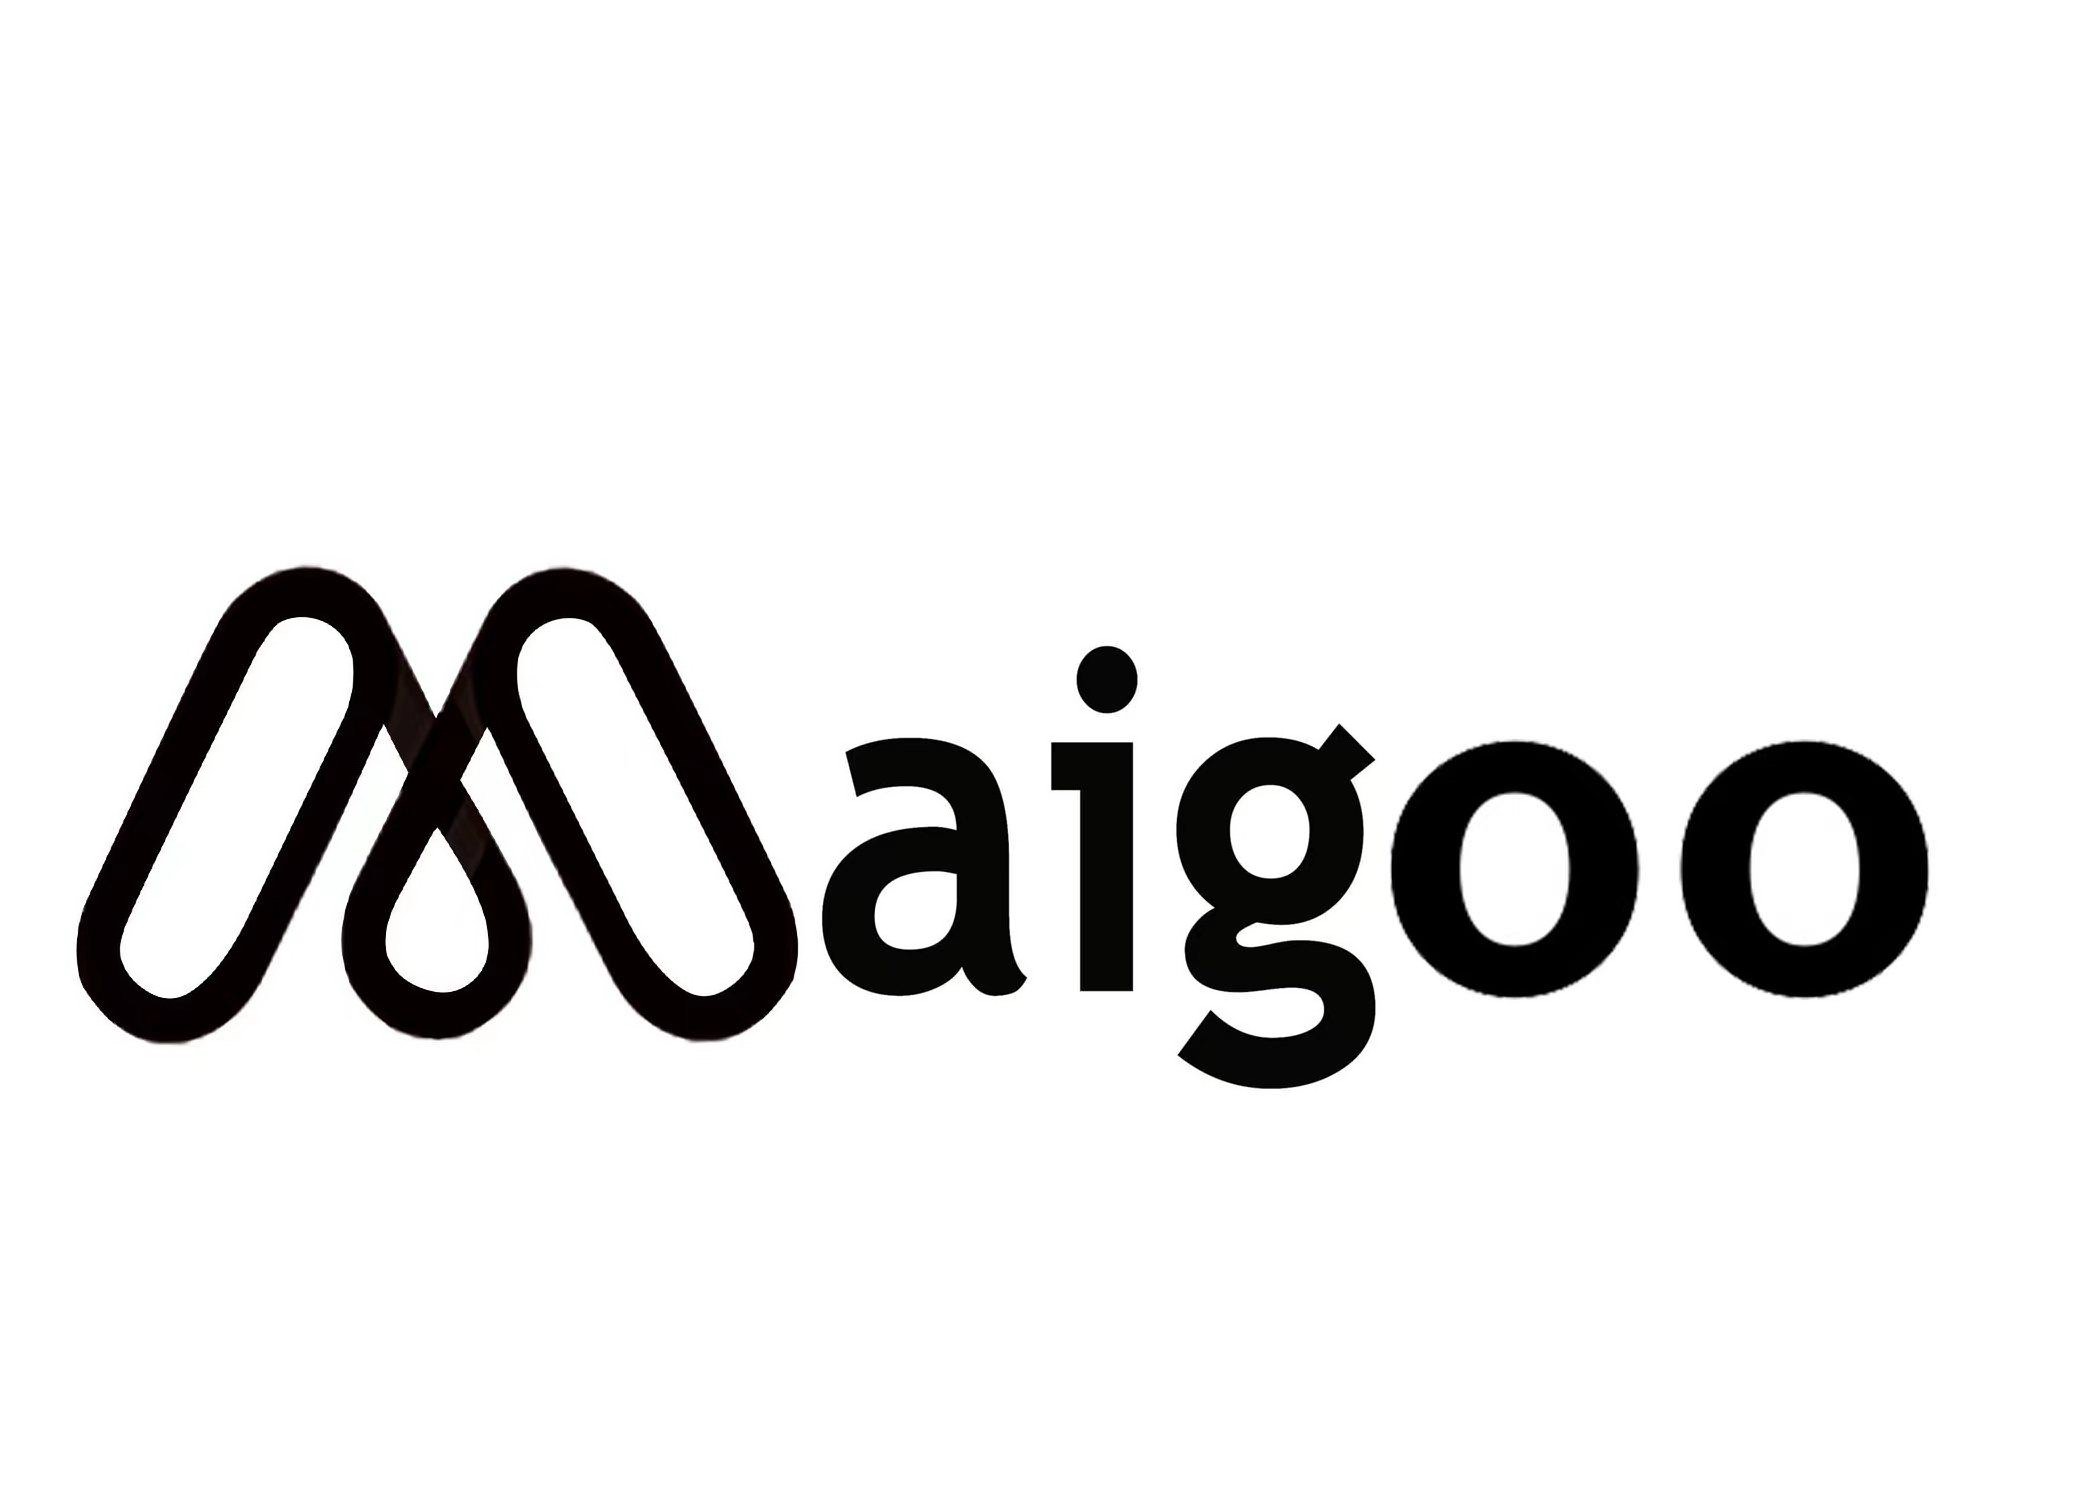 MAIGOO